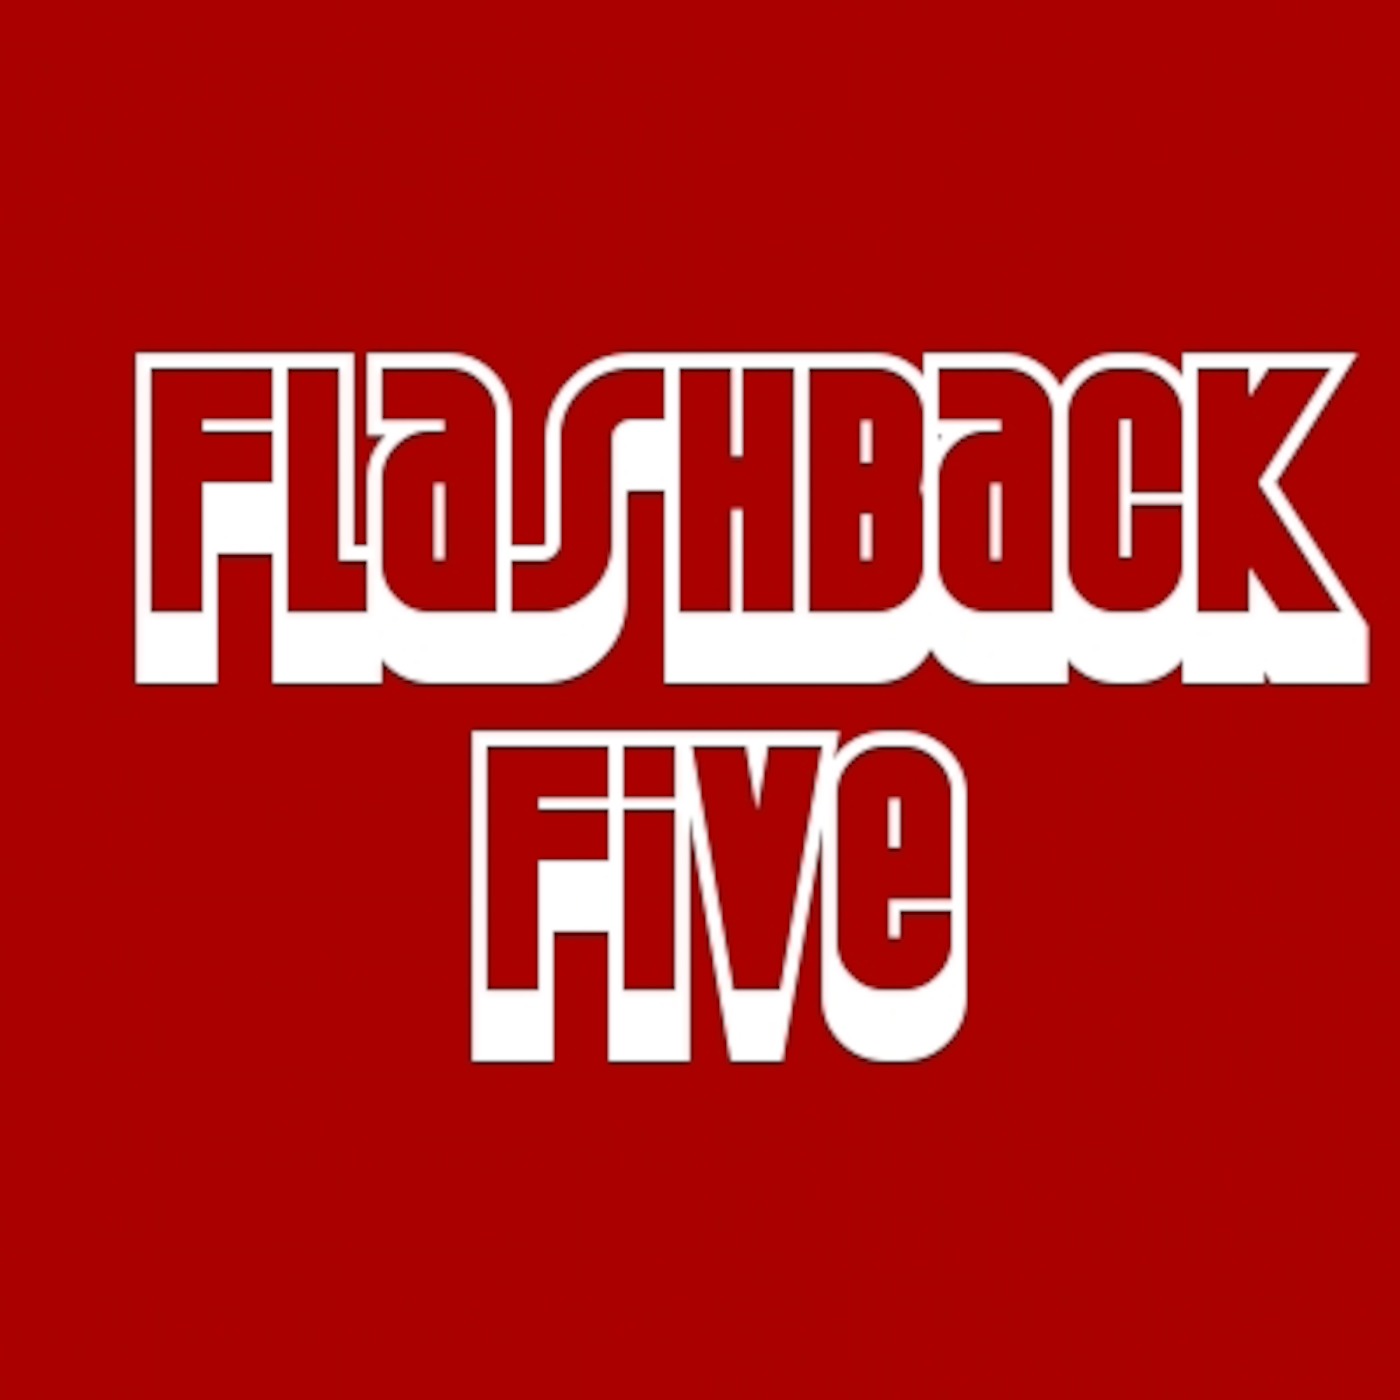 Flashback Five